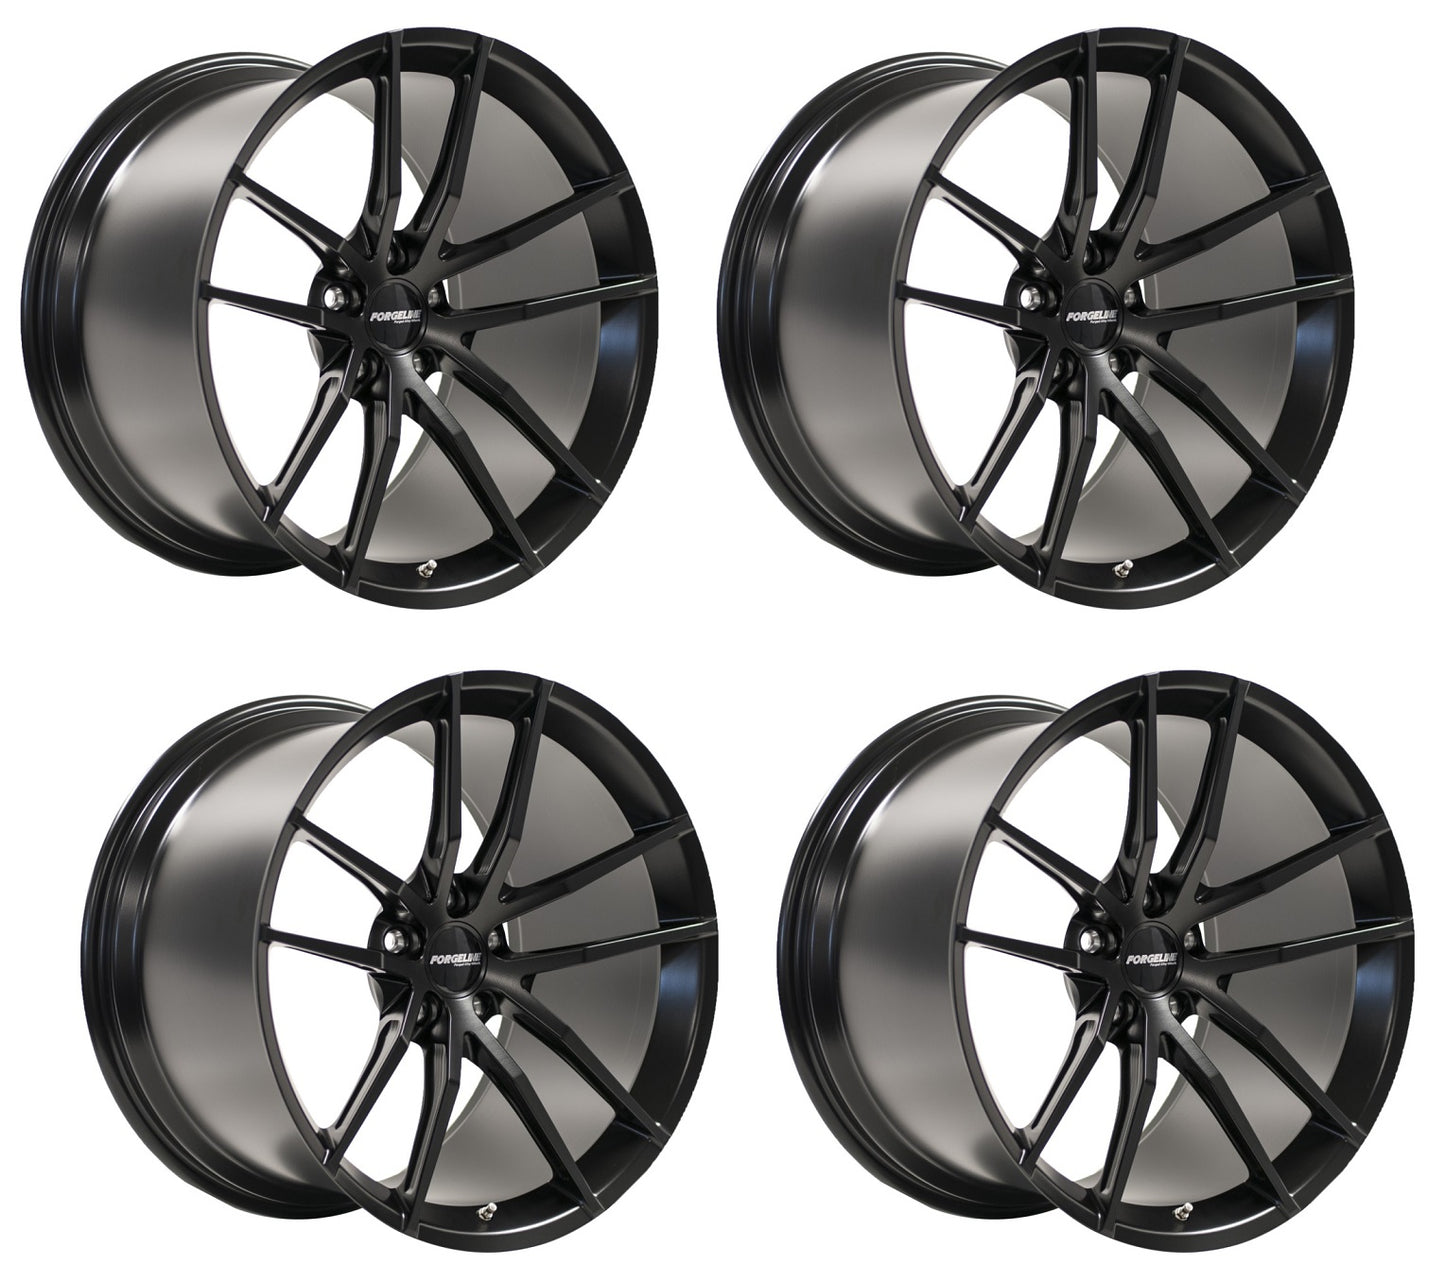 C8 Corvette Wheels: Forgeline AR1 - Satin Black (Set)